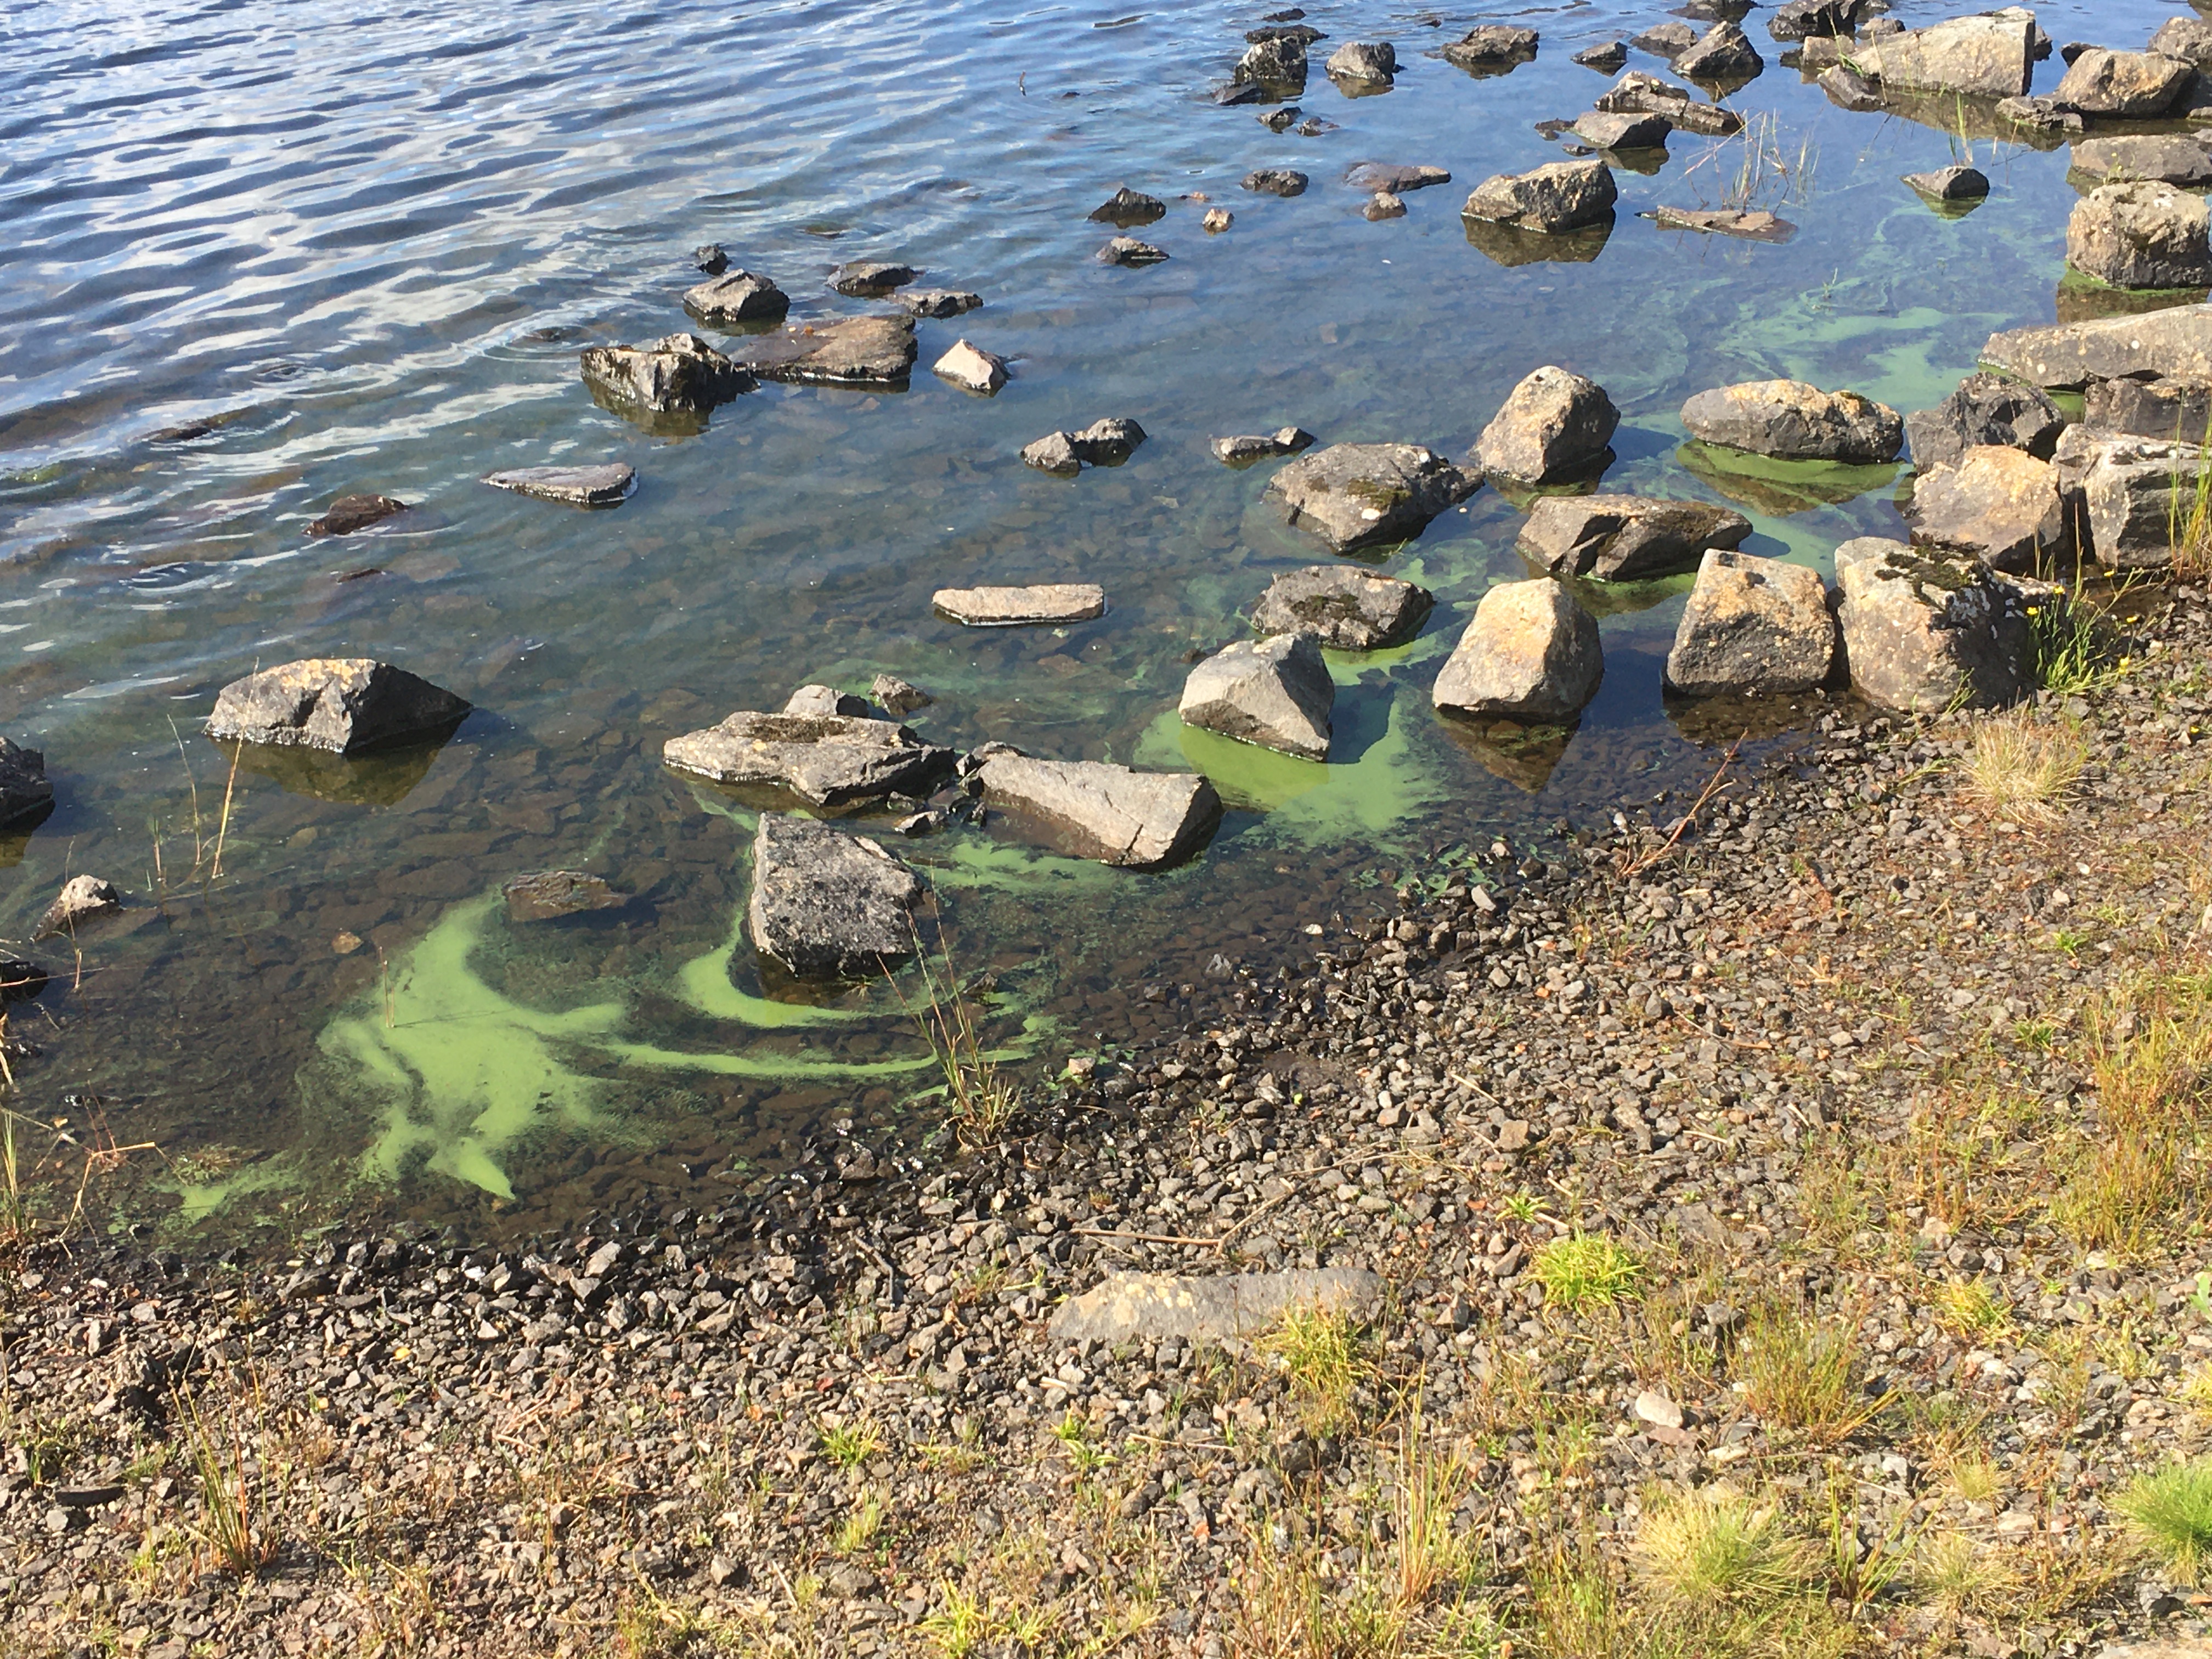 A bloomin’ year for algae and cyanobacteria